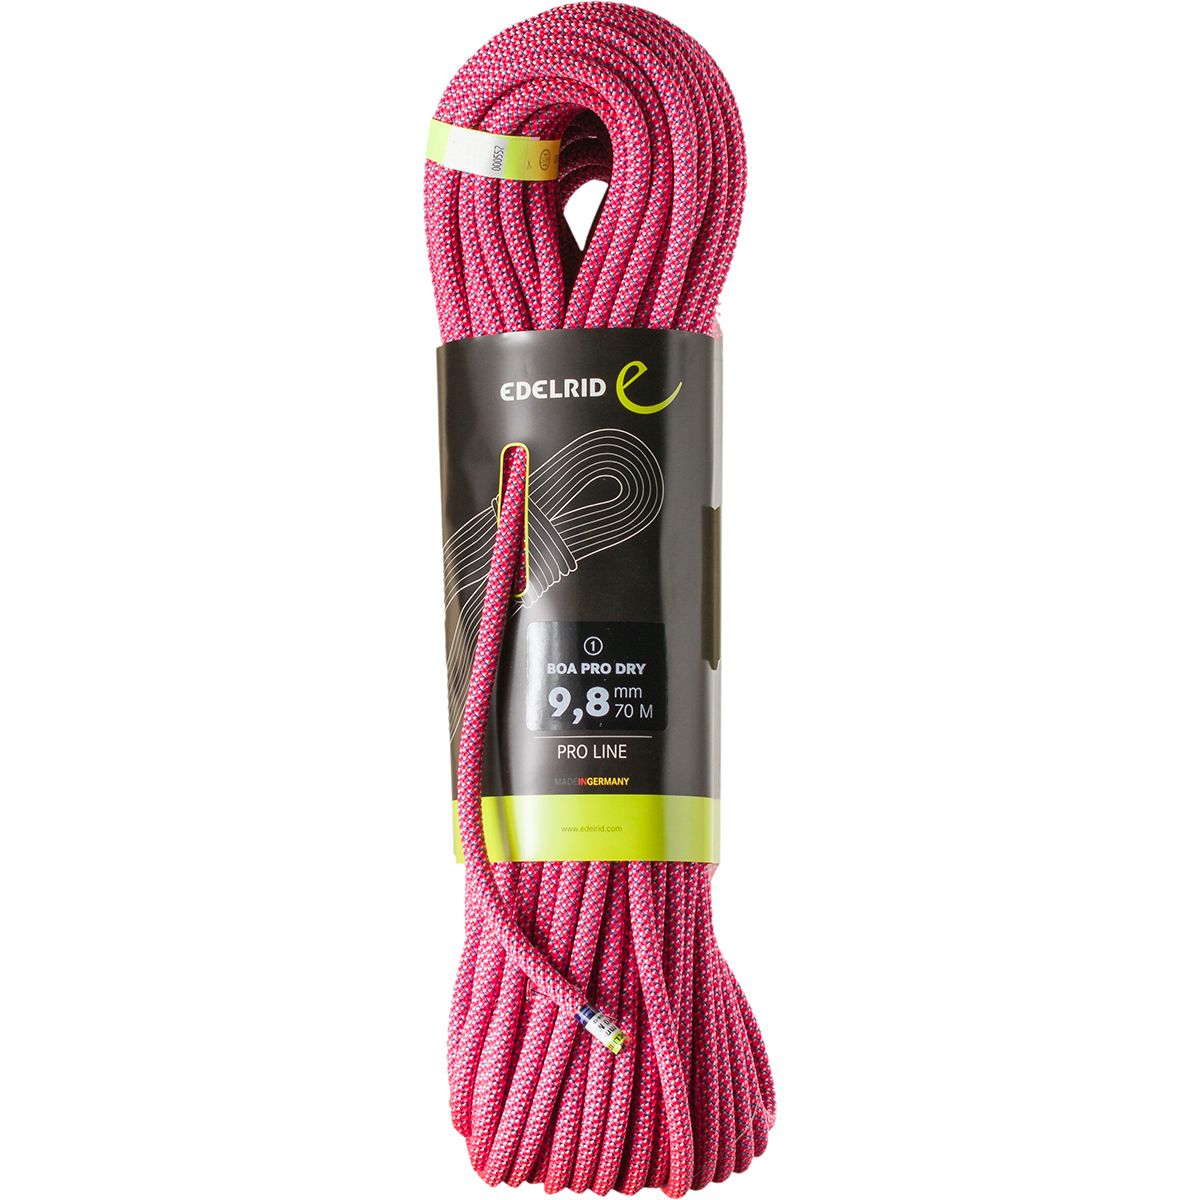 Edelrid Boa Pro Dry Climbing Rope - 9.8mm